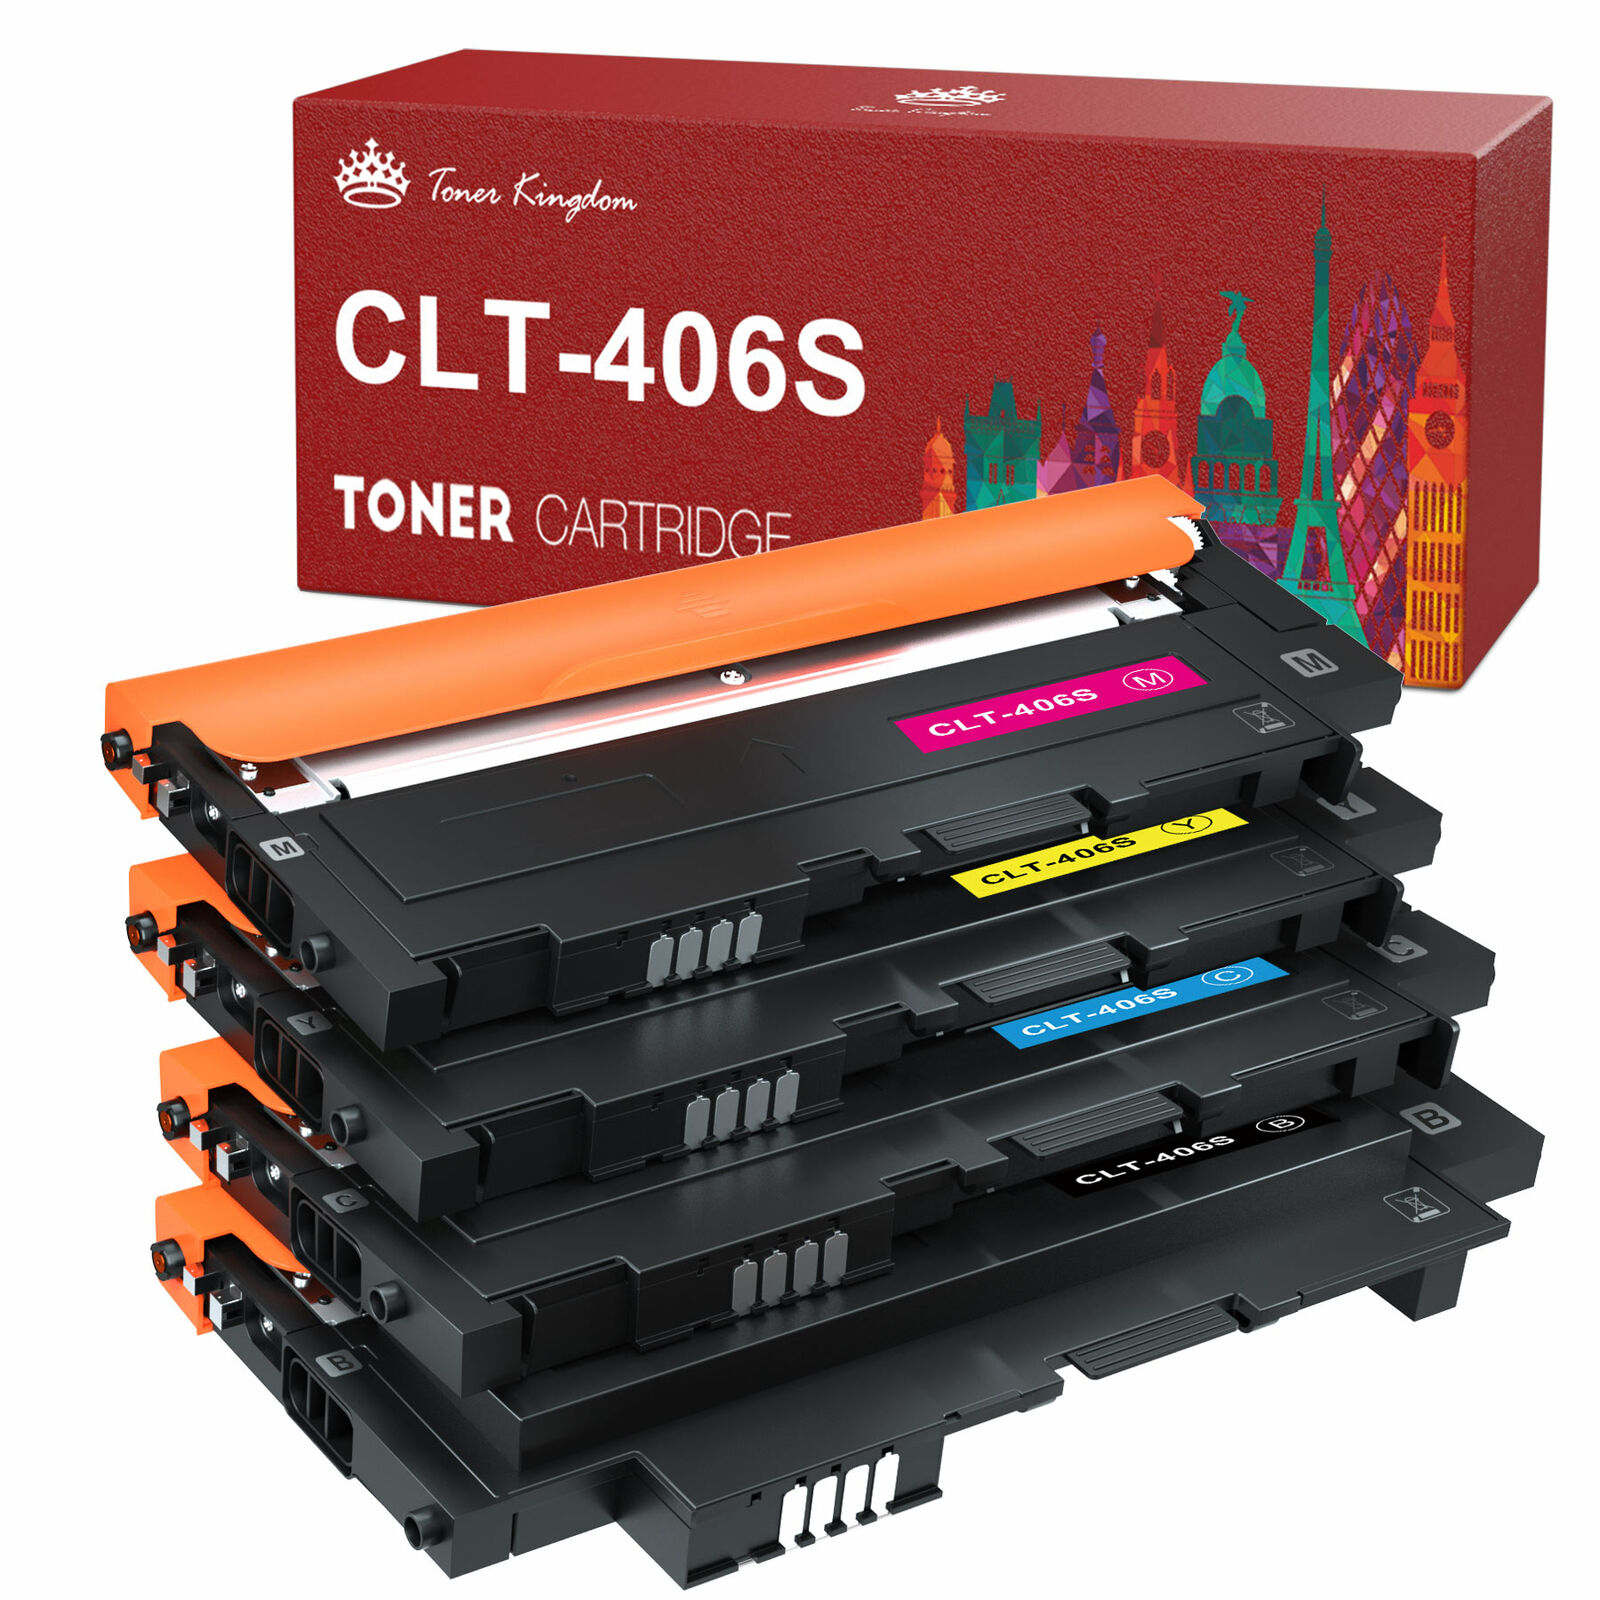 4 Pack Color CLT-K406S Toner for Samsung CLP-365W CLX-3305FW Xpress C410W C460FW